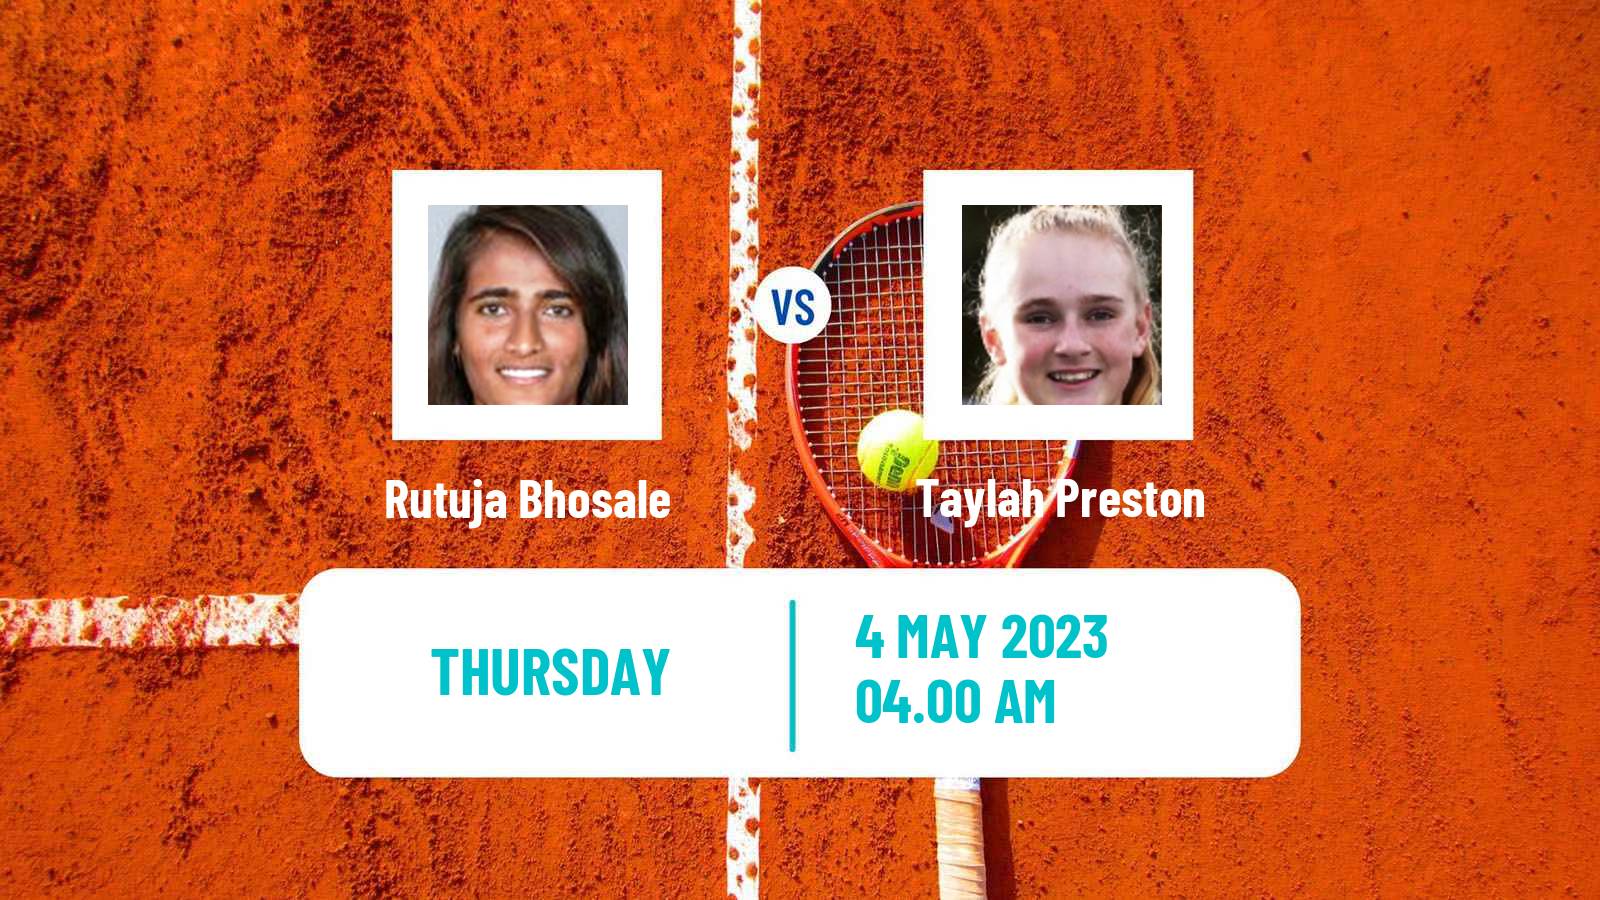 Tennis ITF Tournaments Rutuja Bhosale - Taylah Preston